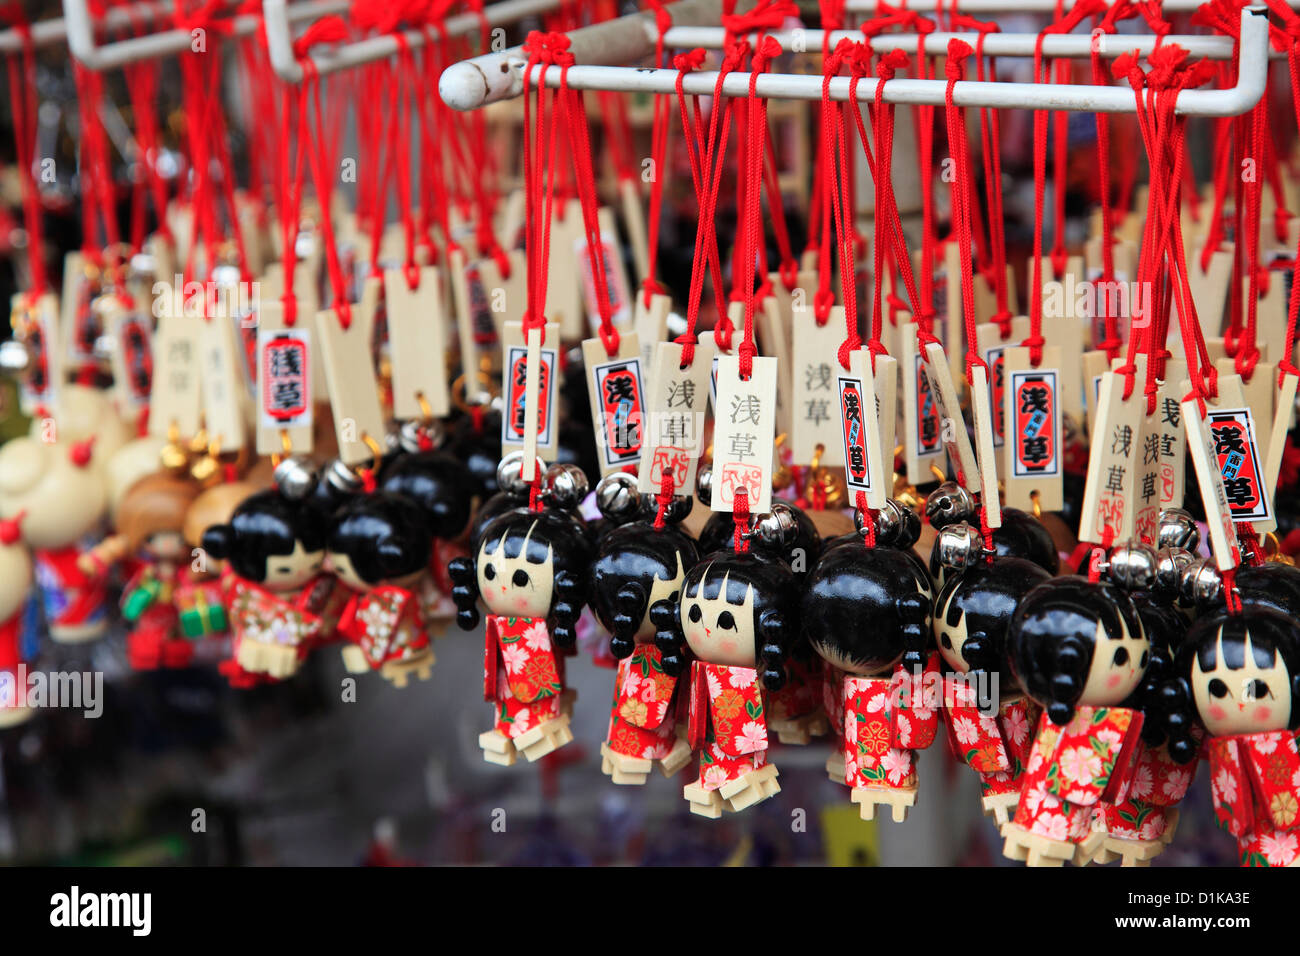 Japanese souvenirs, Asakusa, Japan Stock Photo